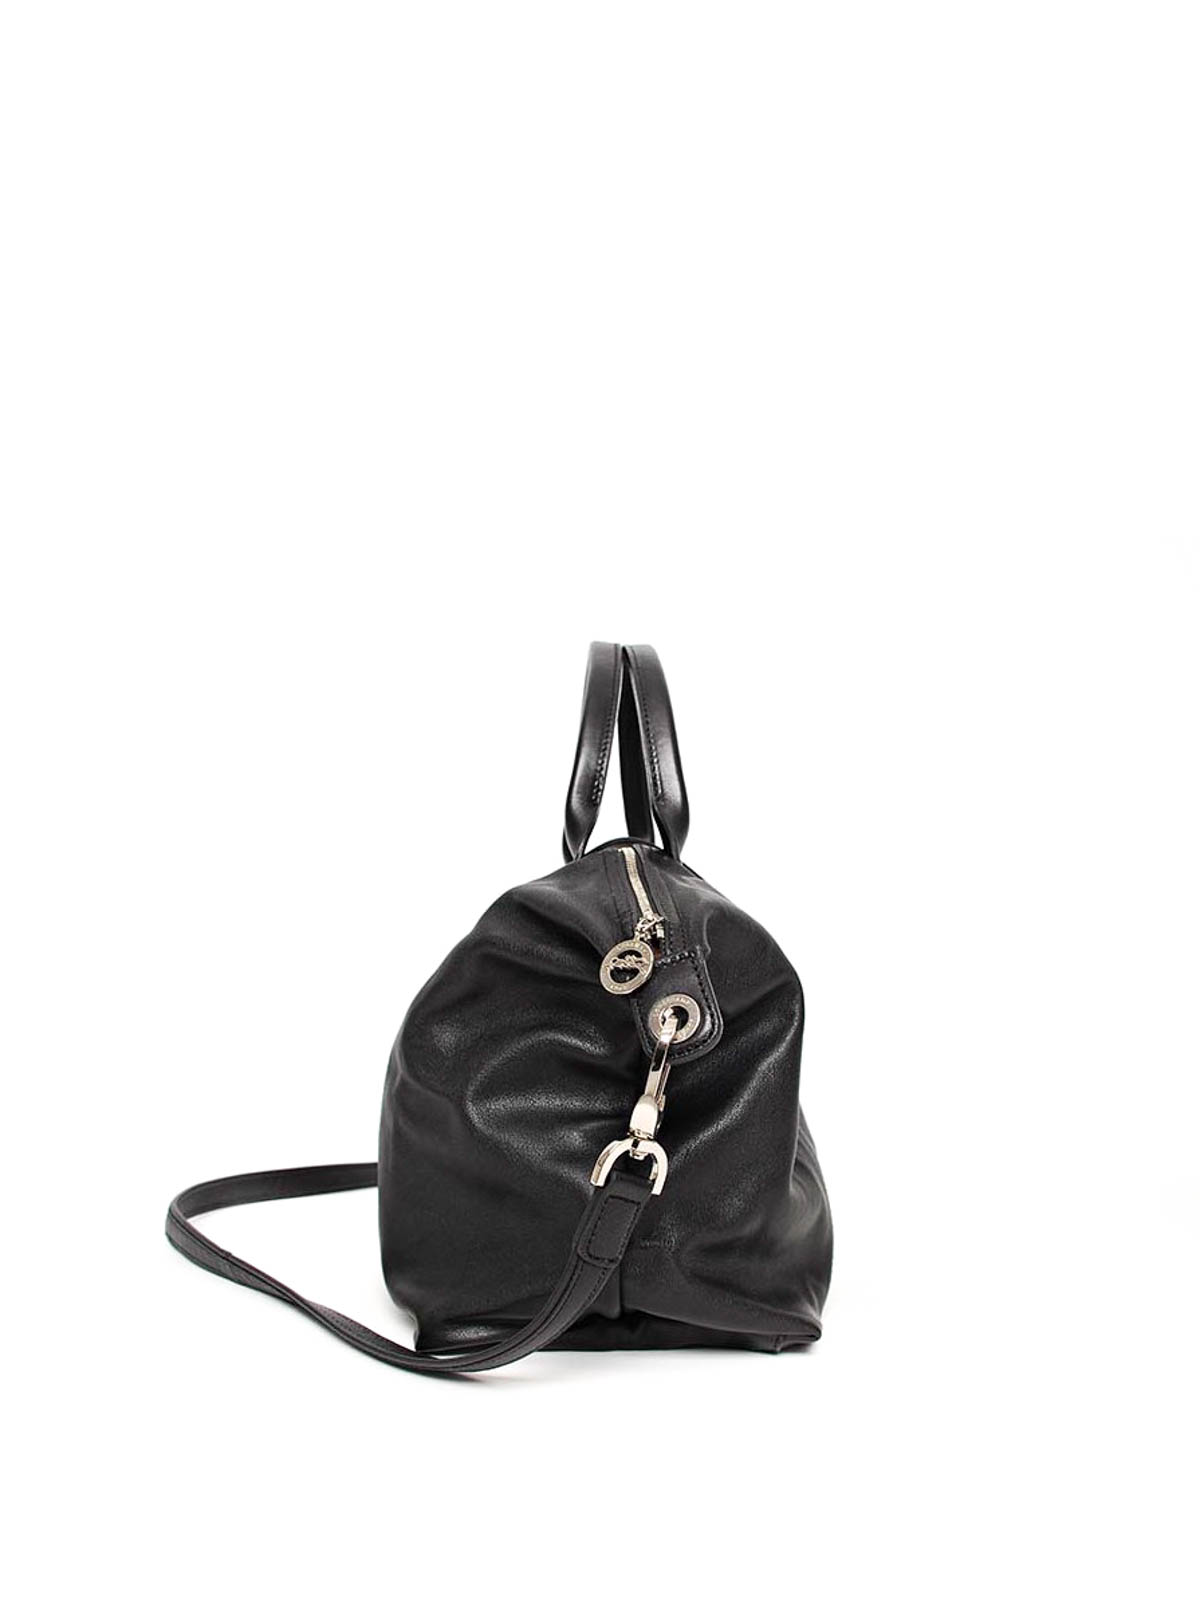 Totes bags Longchamp - Le Pliage Cuir large hand bag - 1515737127